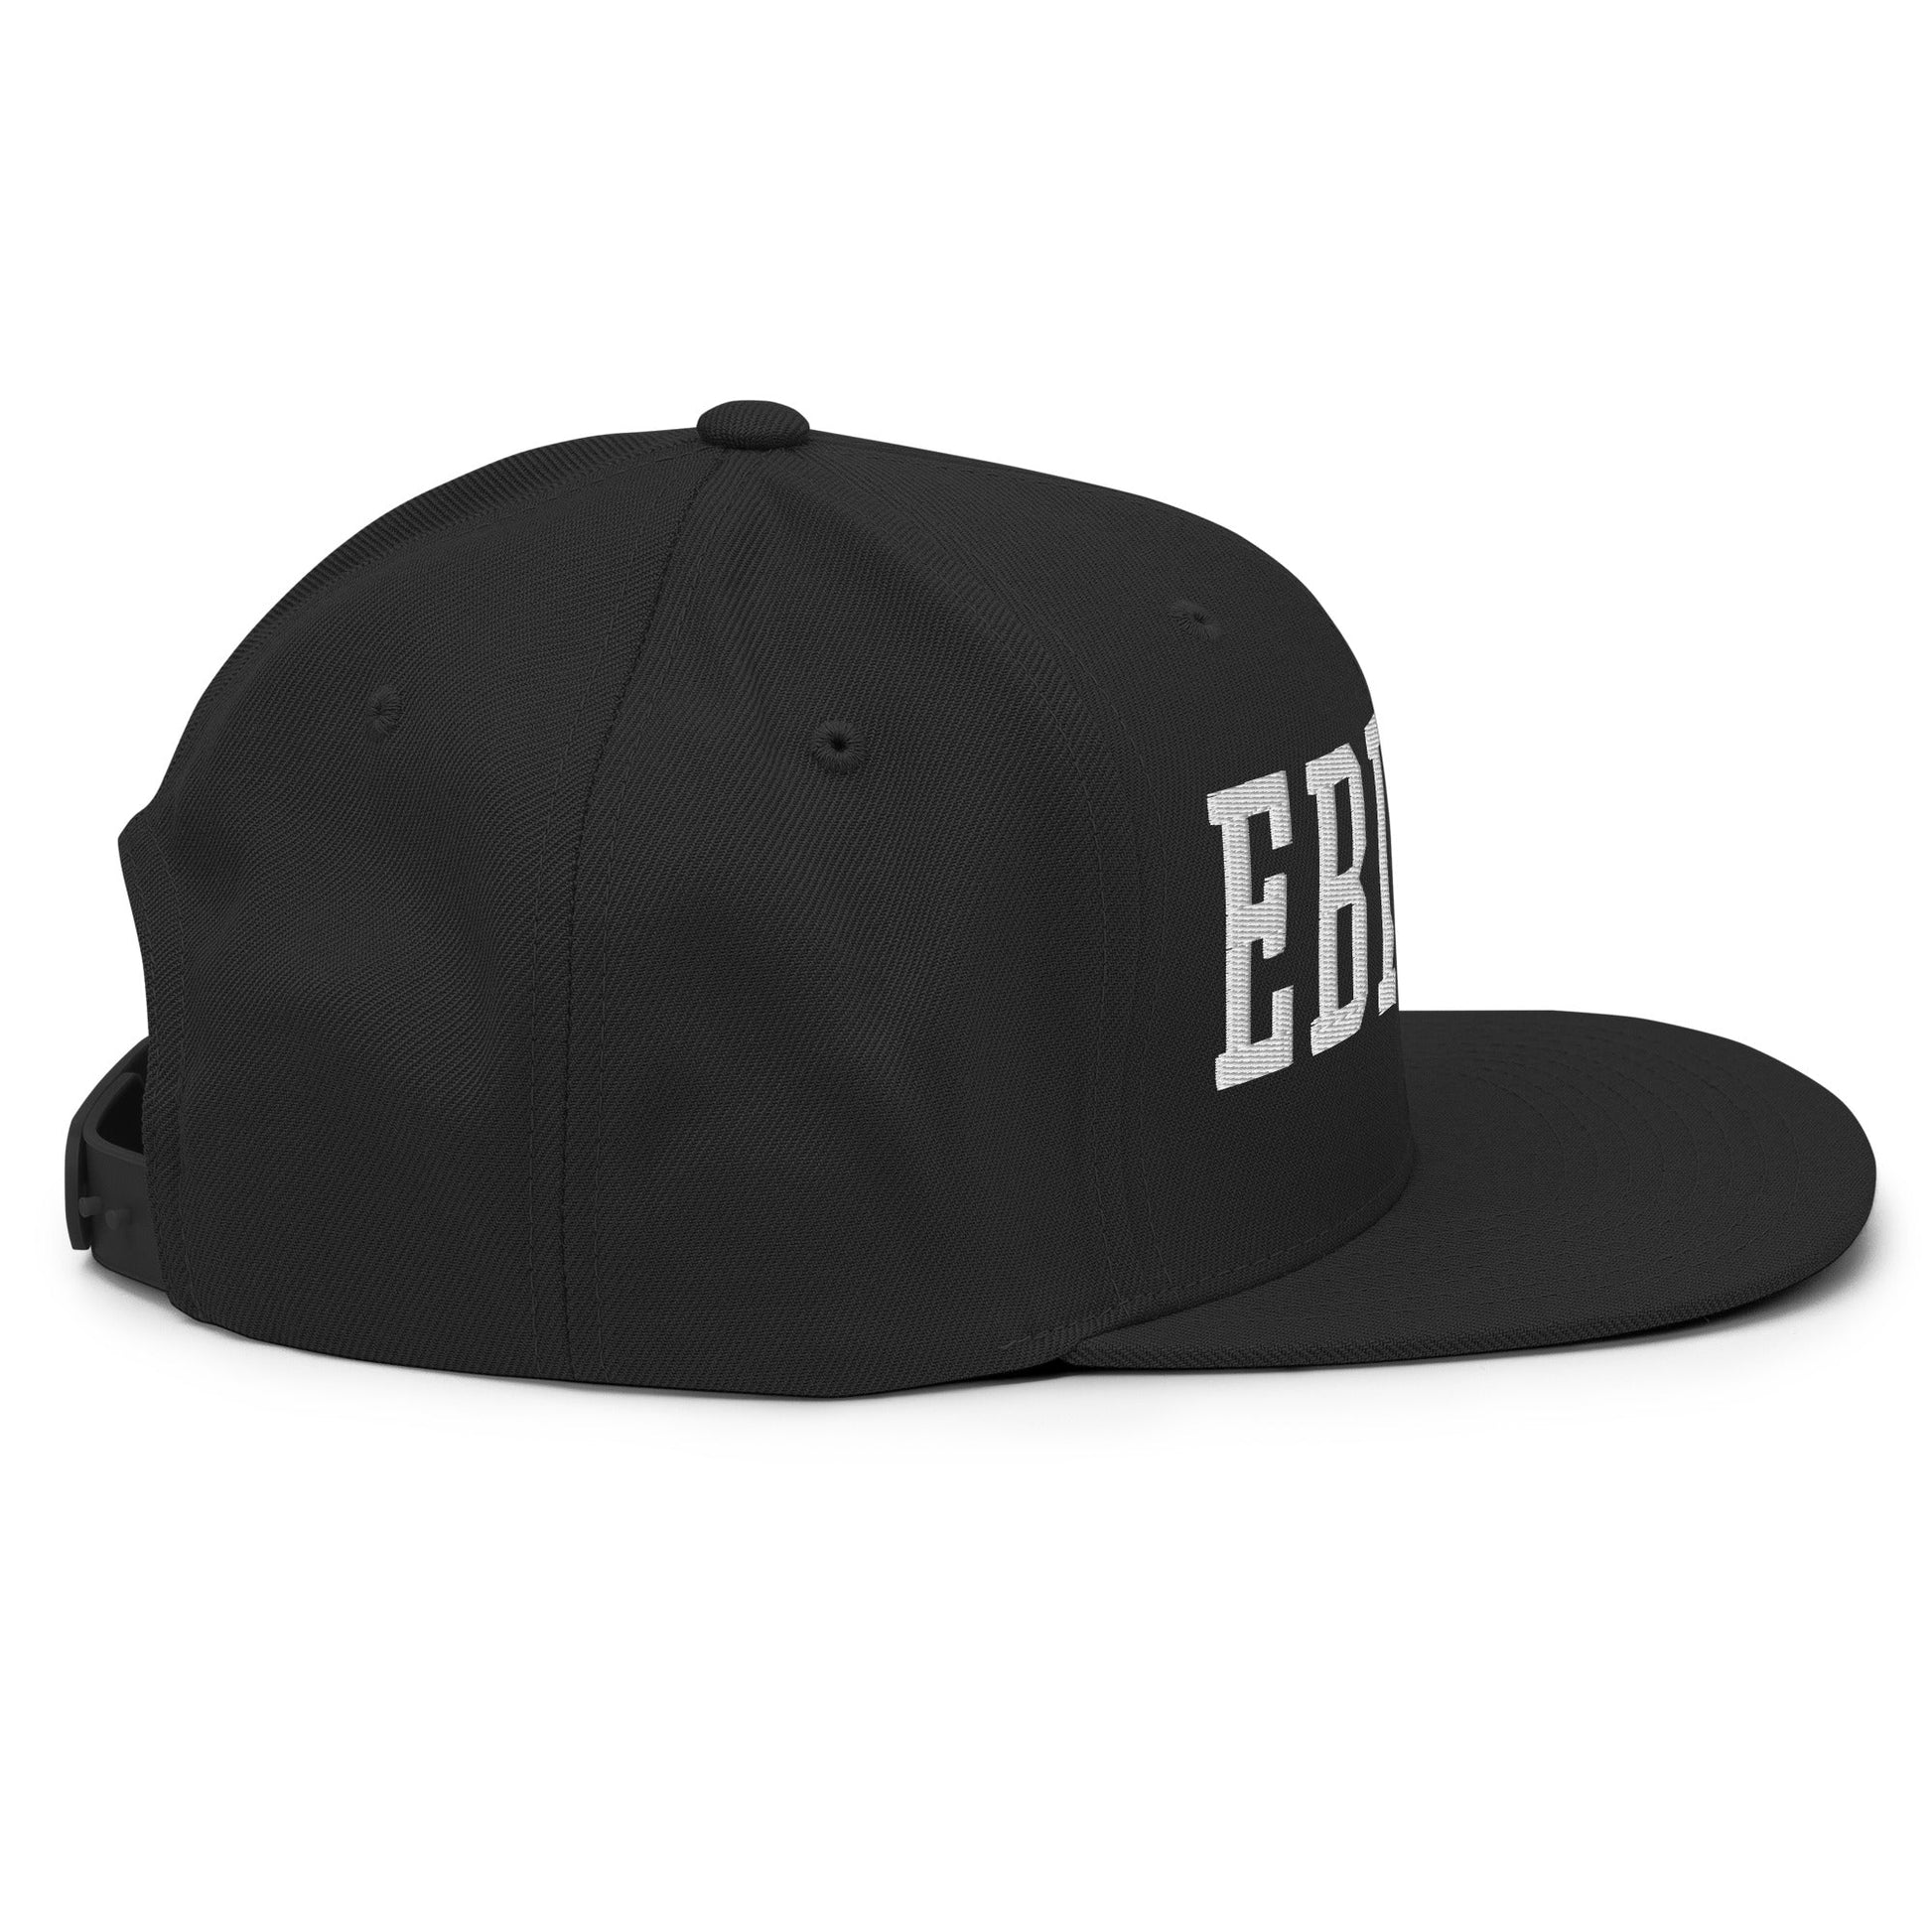 EBITDA Varsity Letterman Block Snapback Hat Black